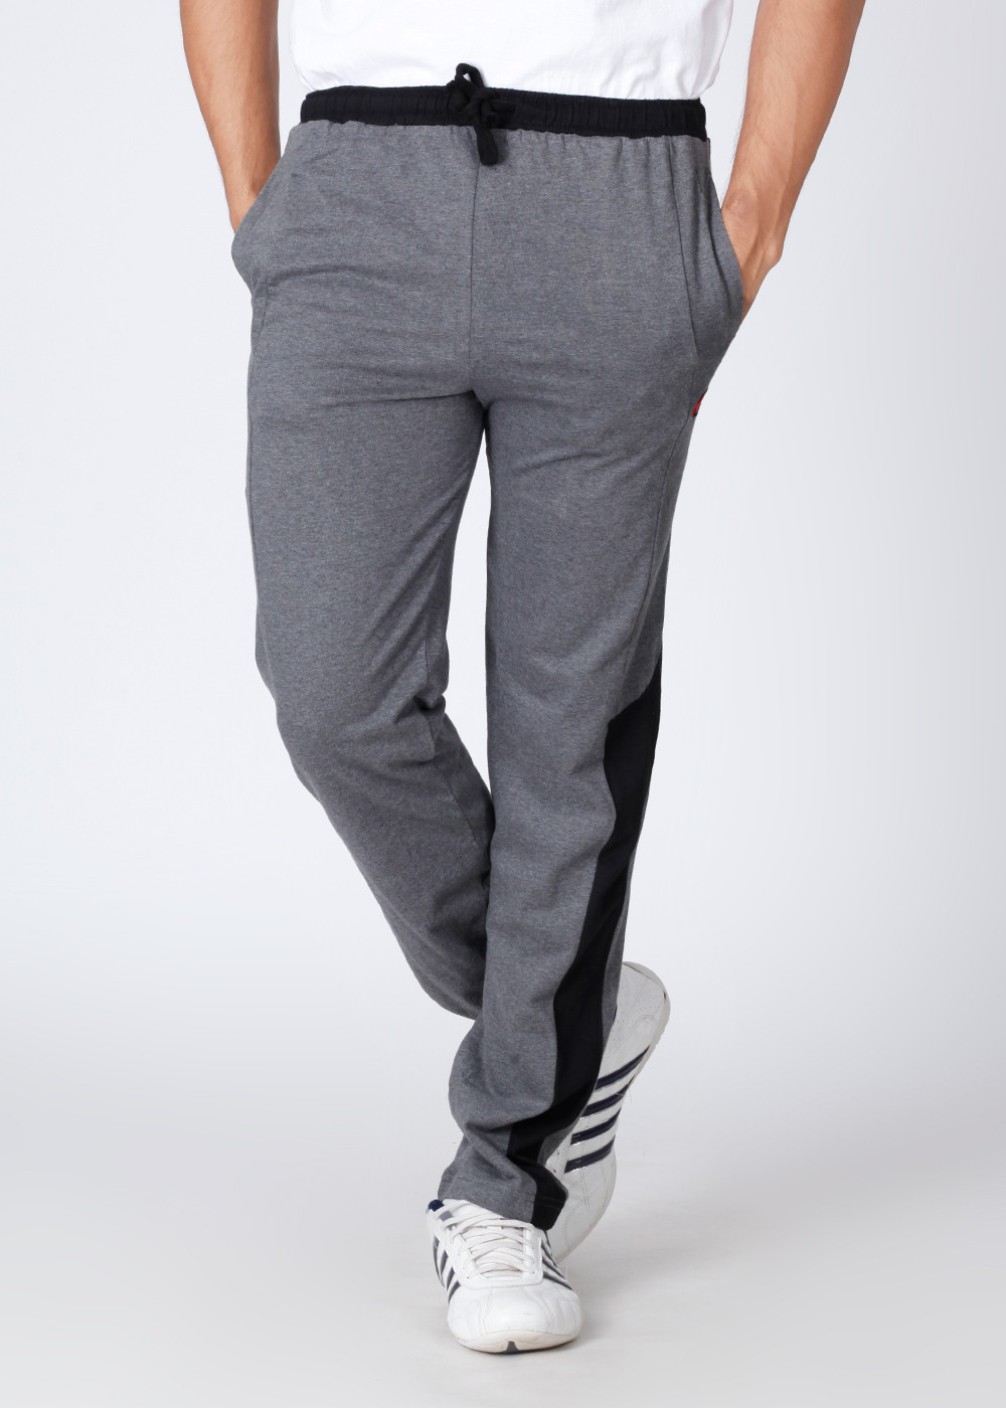 Chromozome Solid Men's Black, Grey Track Pants - Buy Grey, Black ...